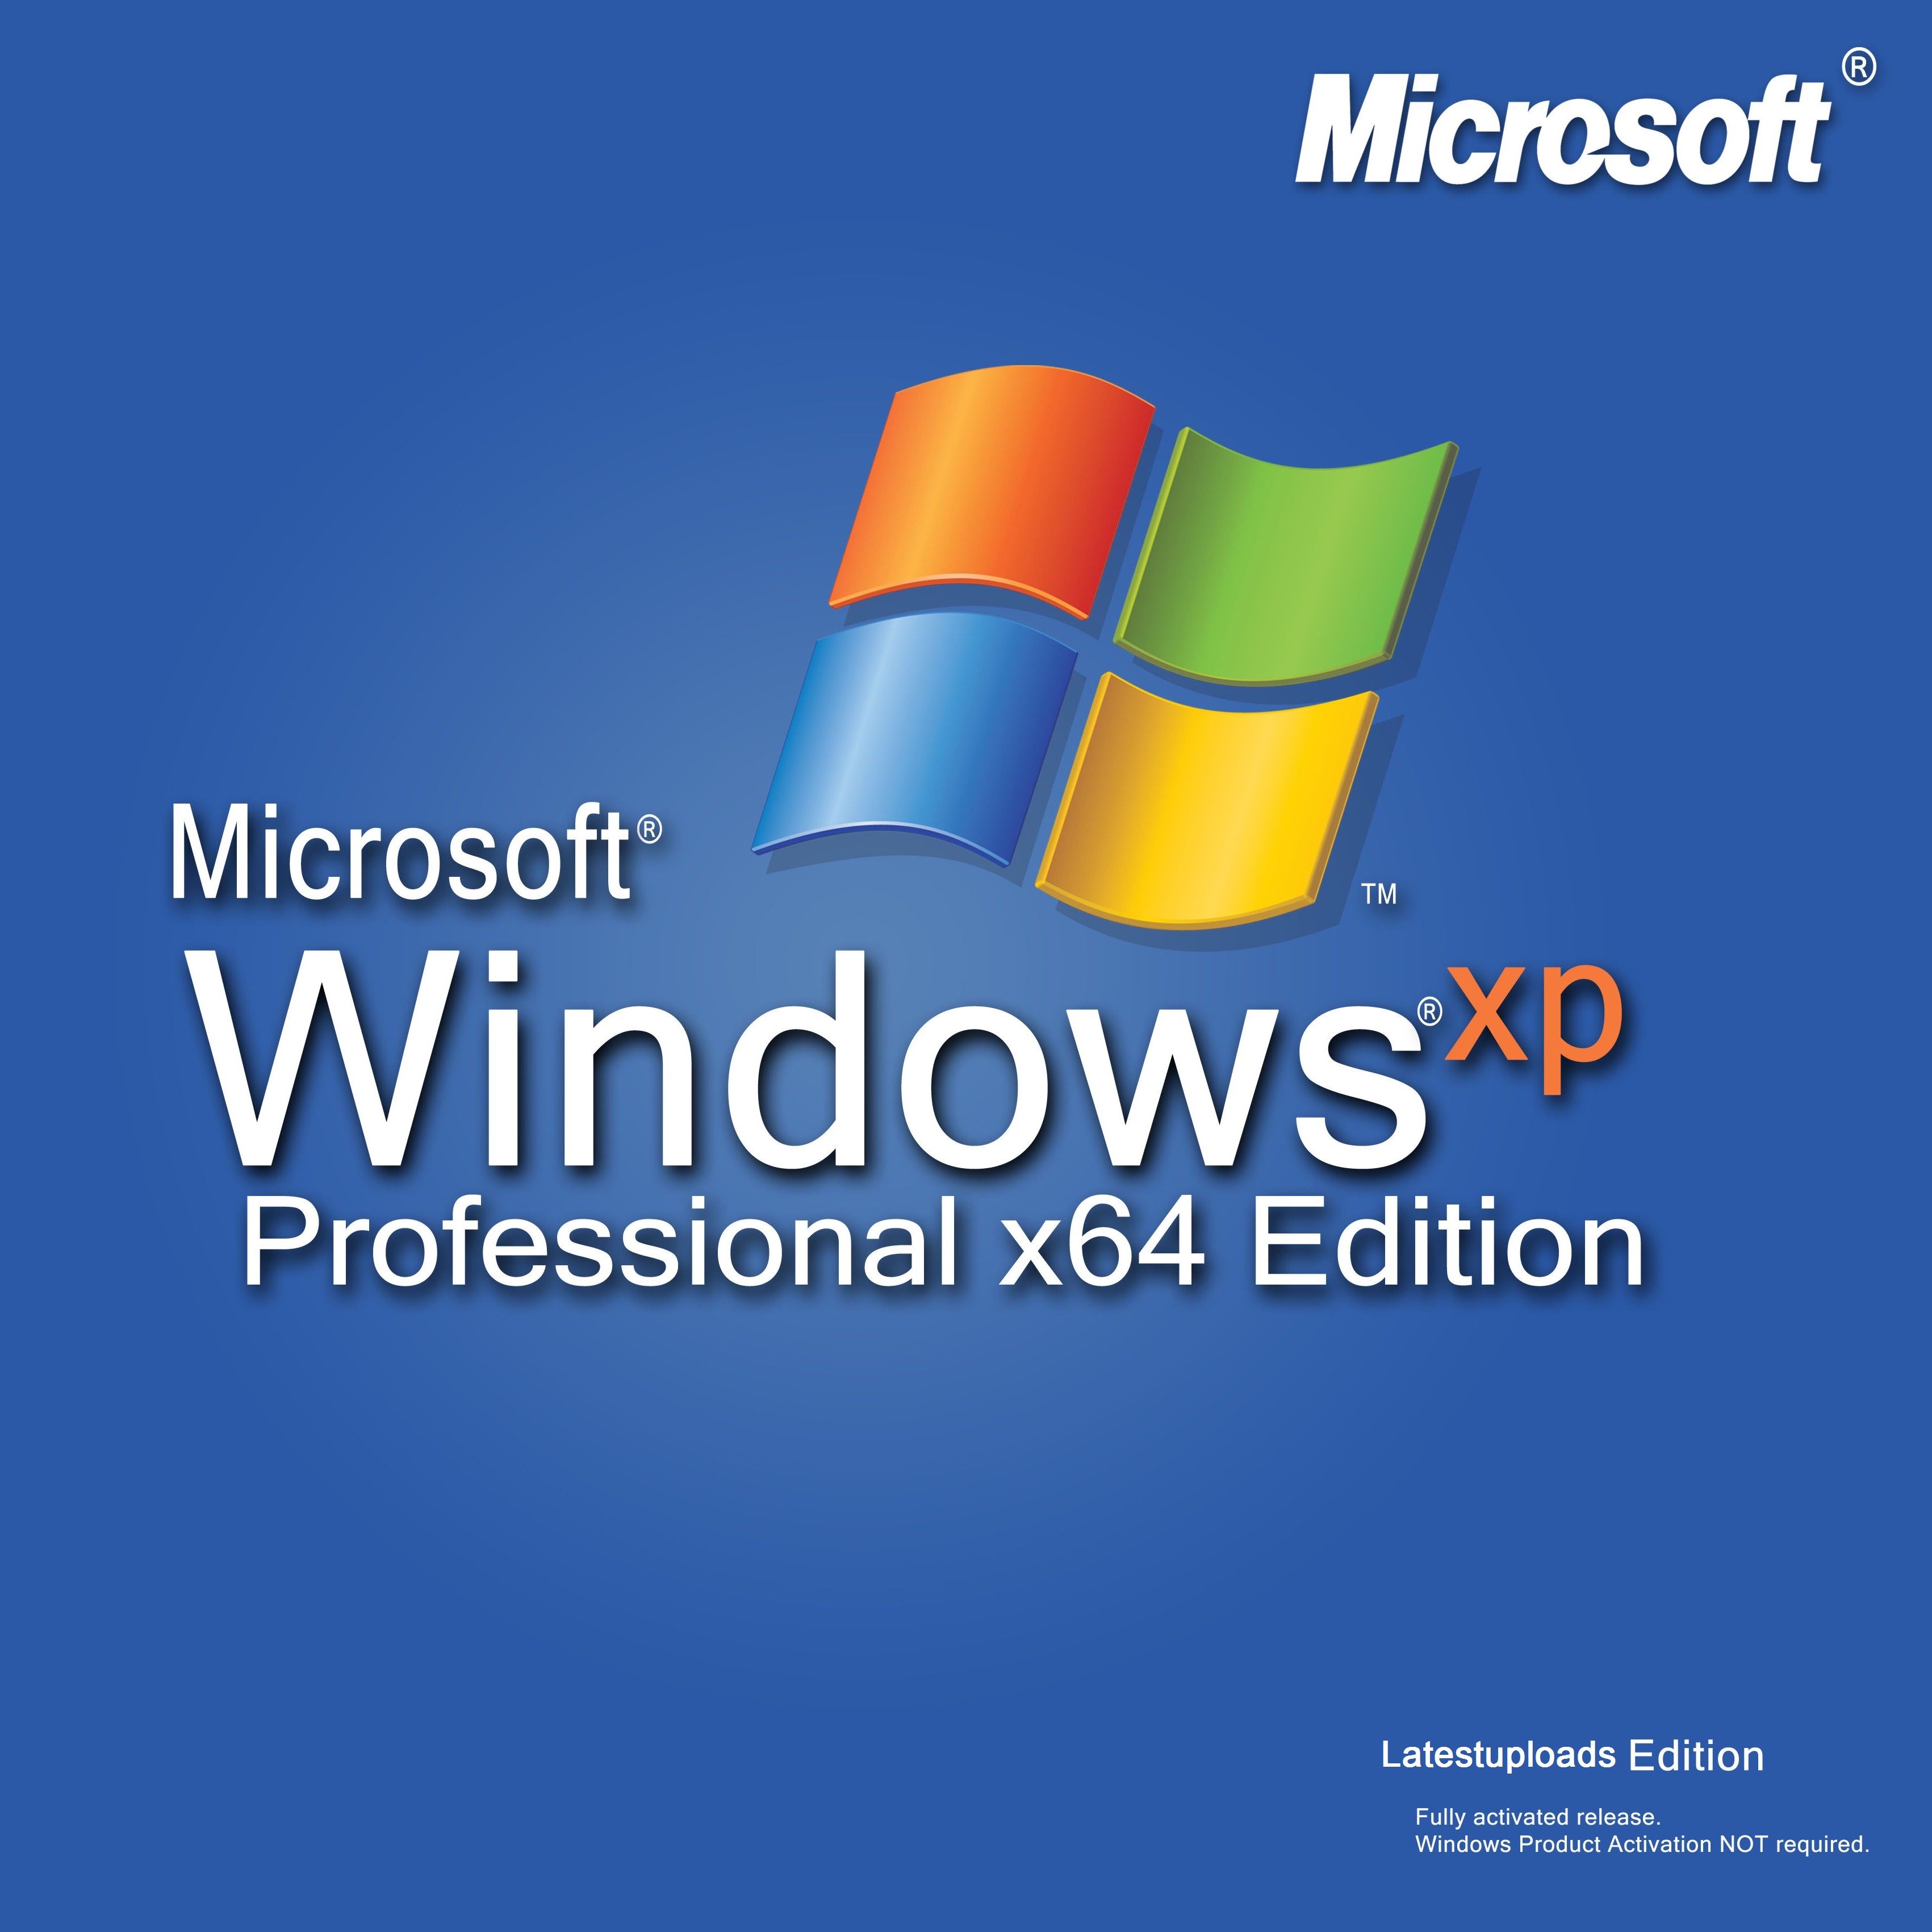 64 bit for windows xp download